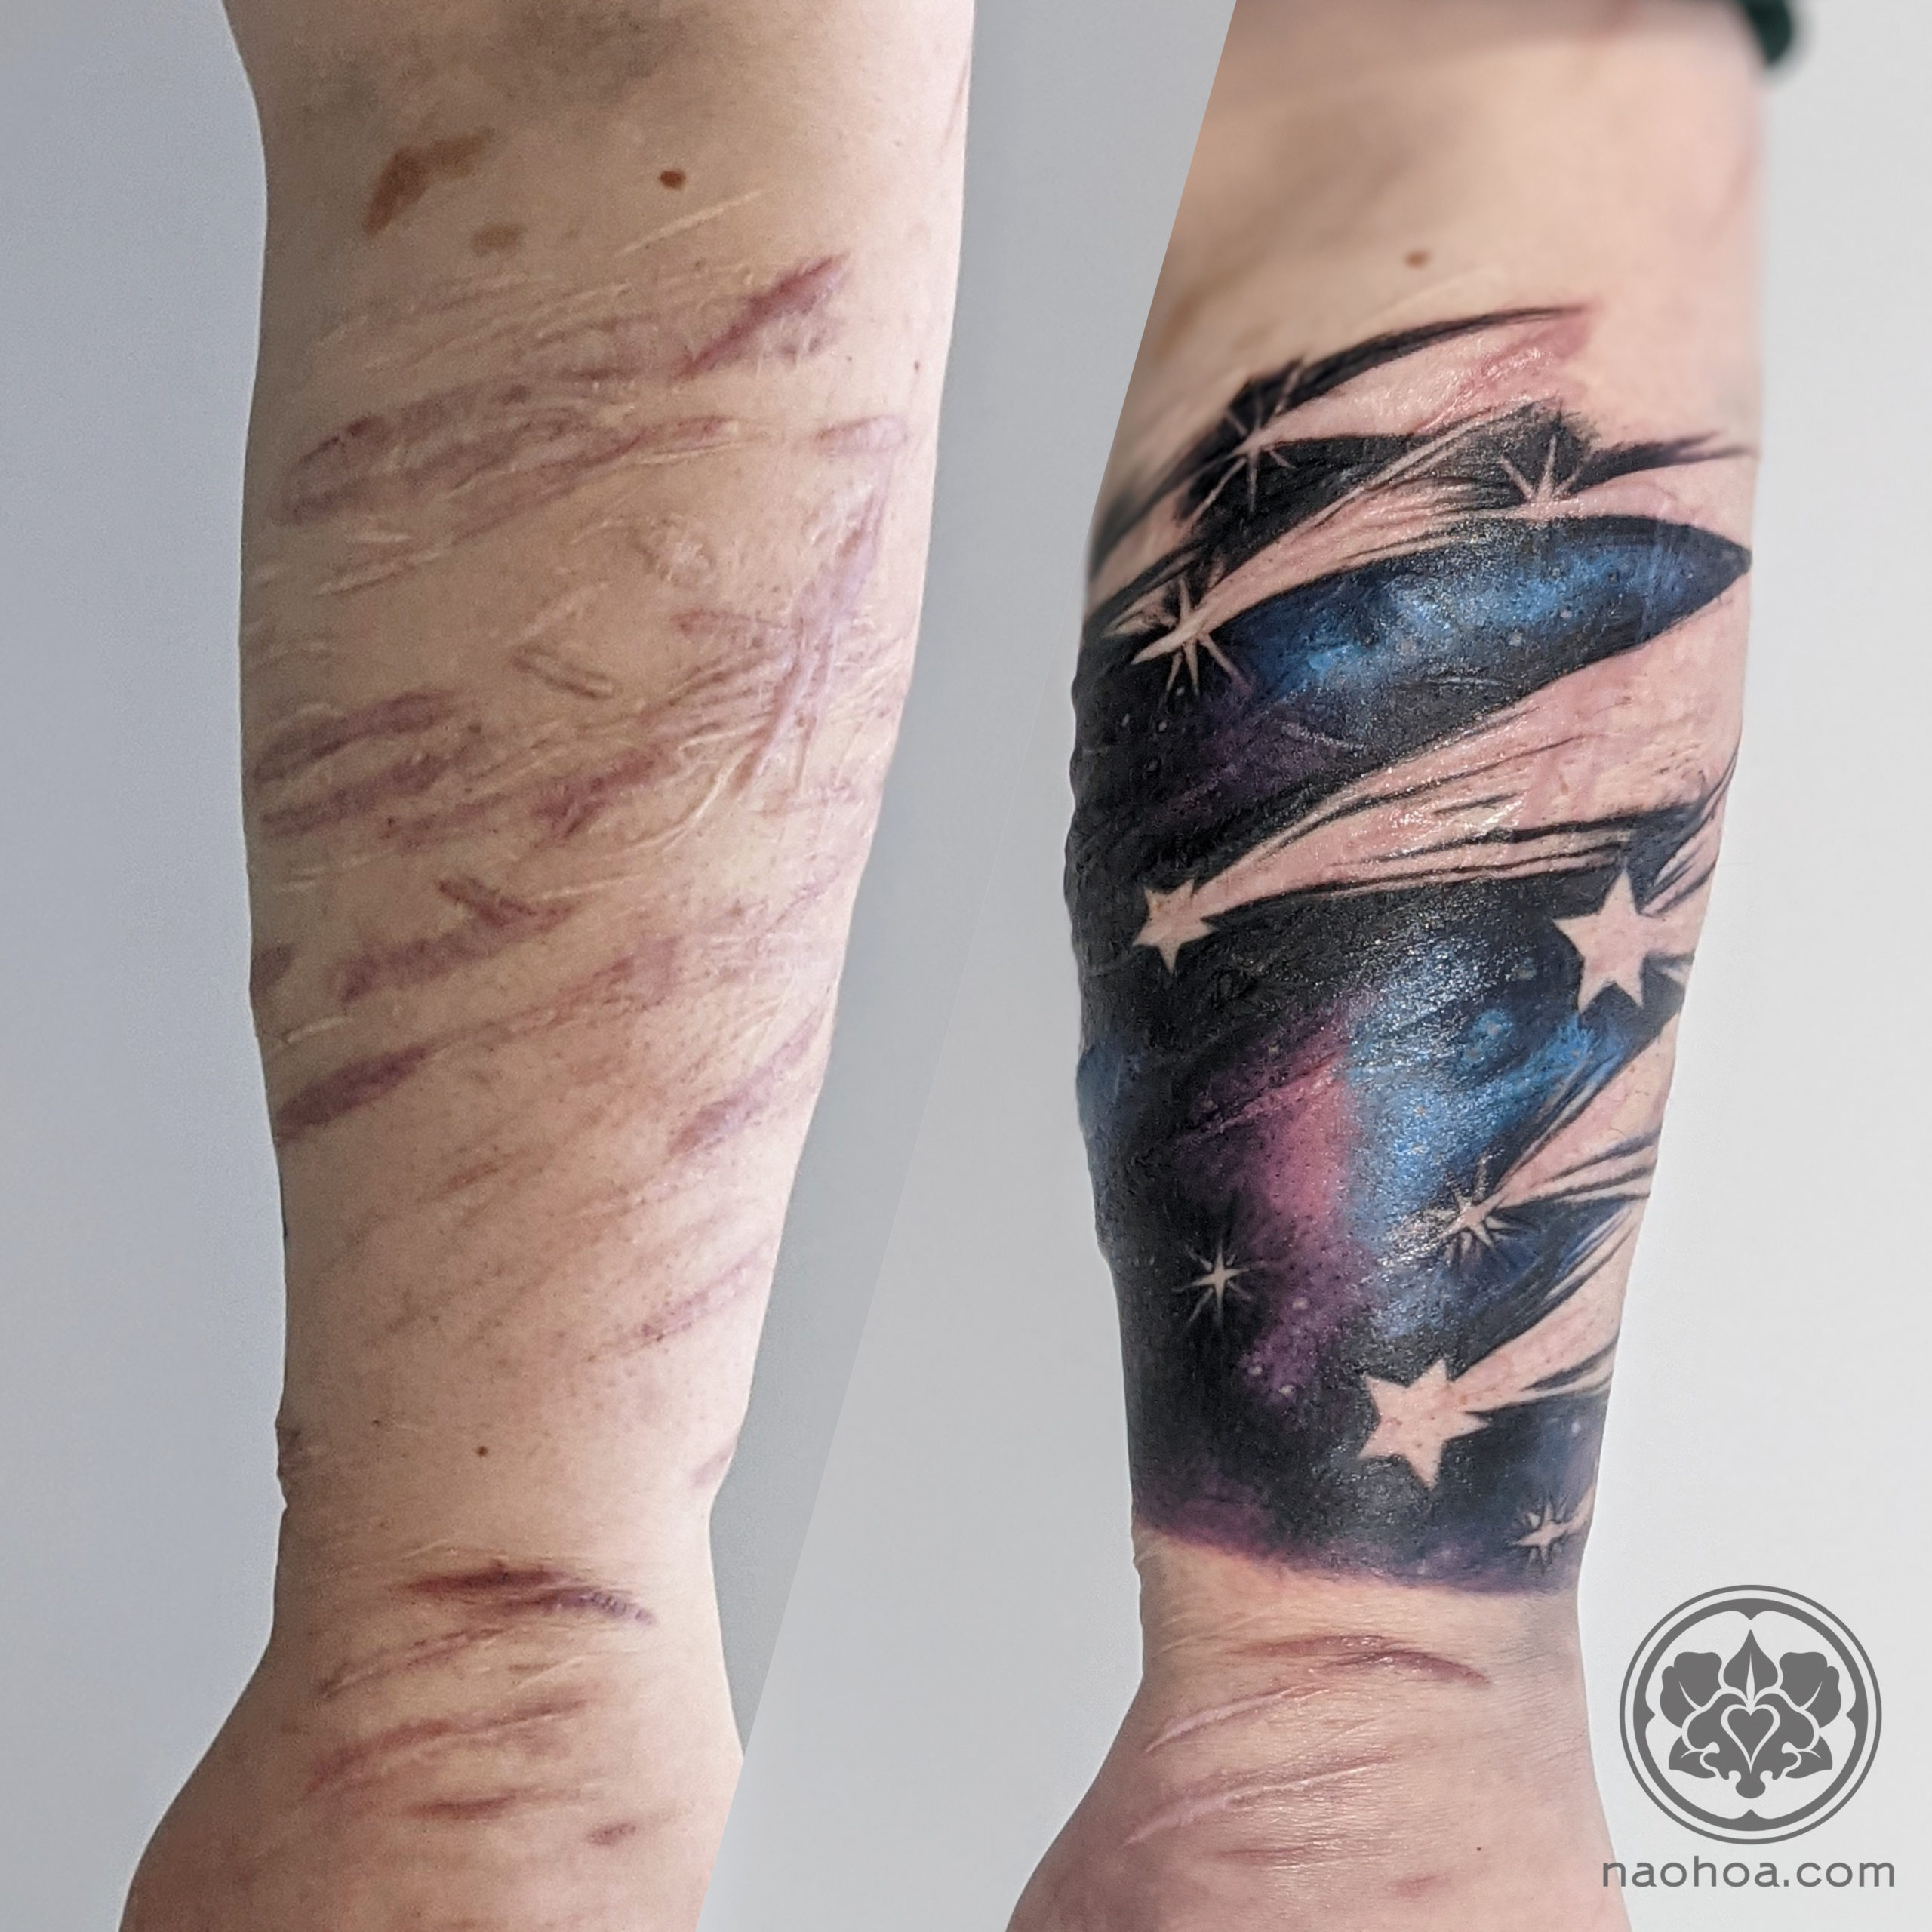 Self Harm Scar Cover-Up Tattooing by Alexandra Winthrop - ALEXANDRA WINTHROP